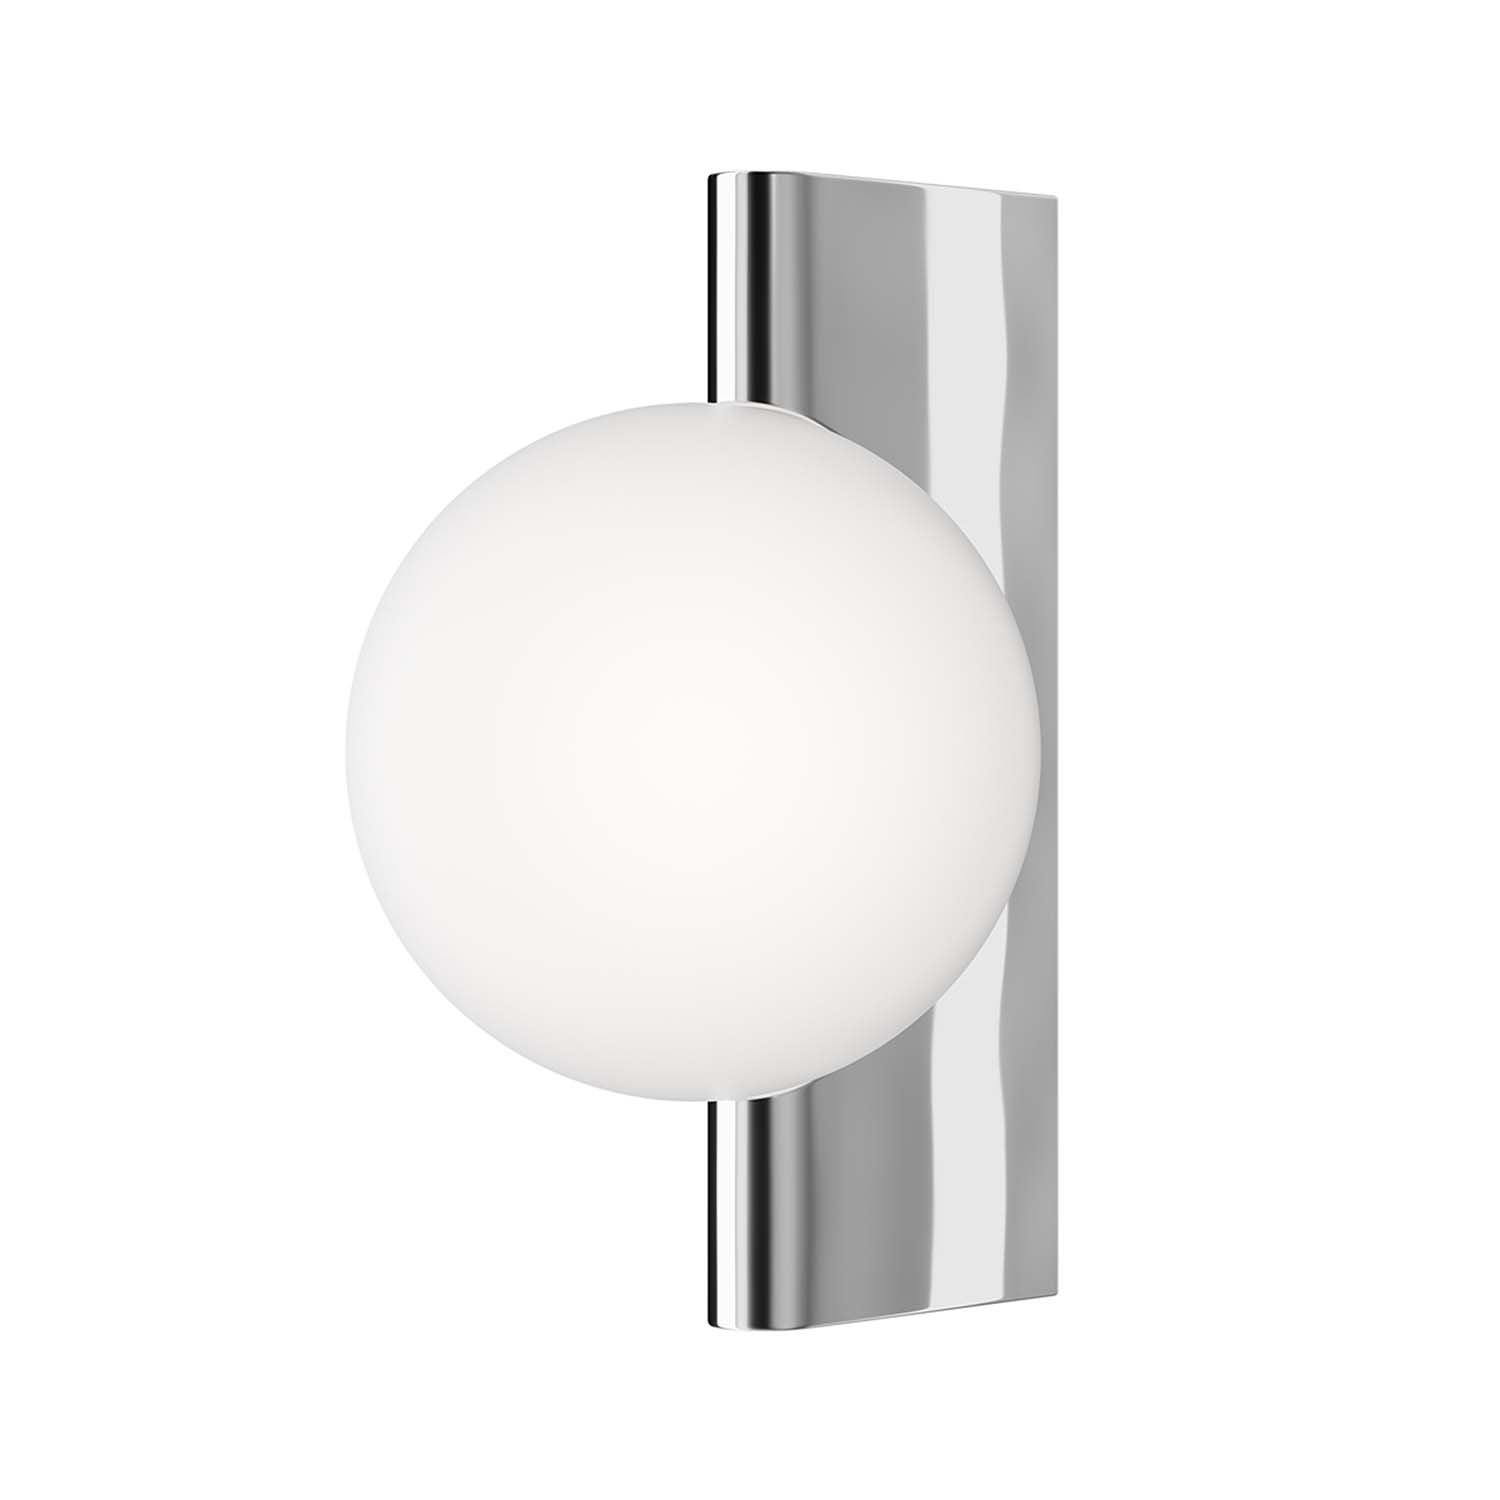 AVANT GARDE - Wall light with glass ball